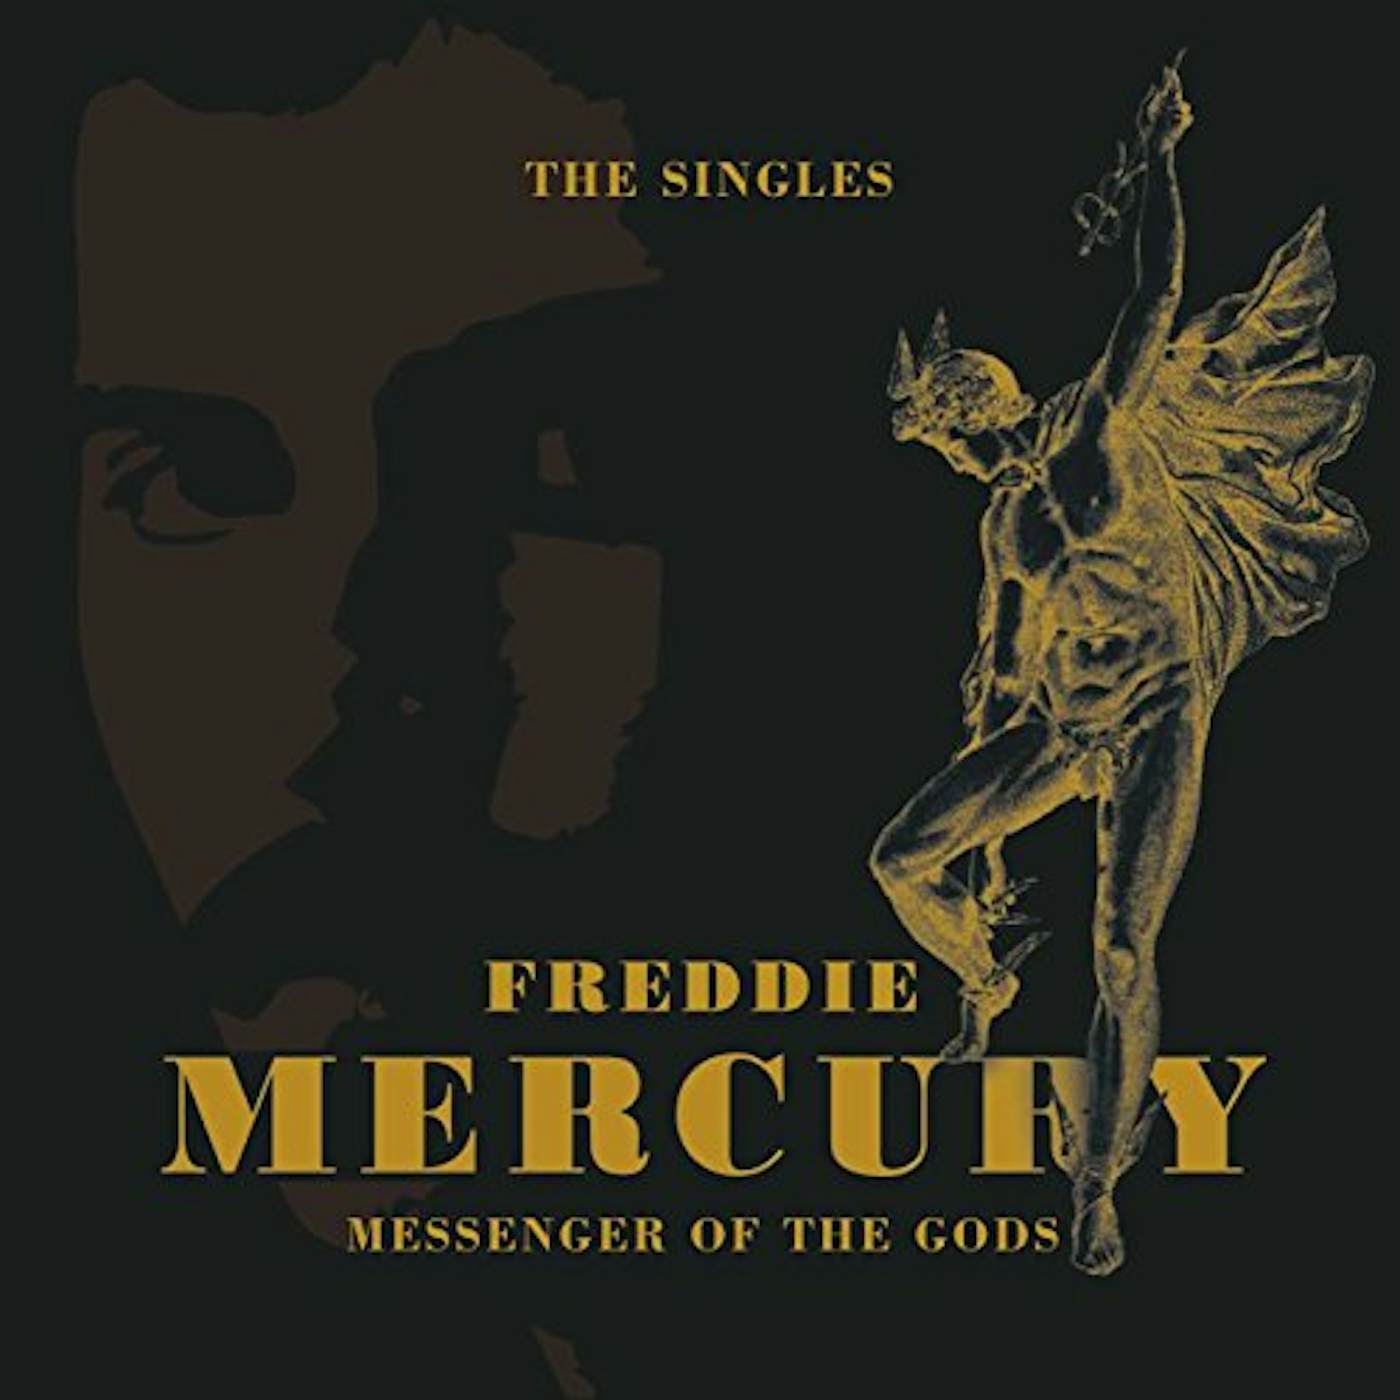 Freddie Mercury MESSENGER OF THE GODS: SINGLES COLLECTION Vinyl Record